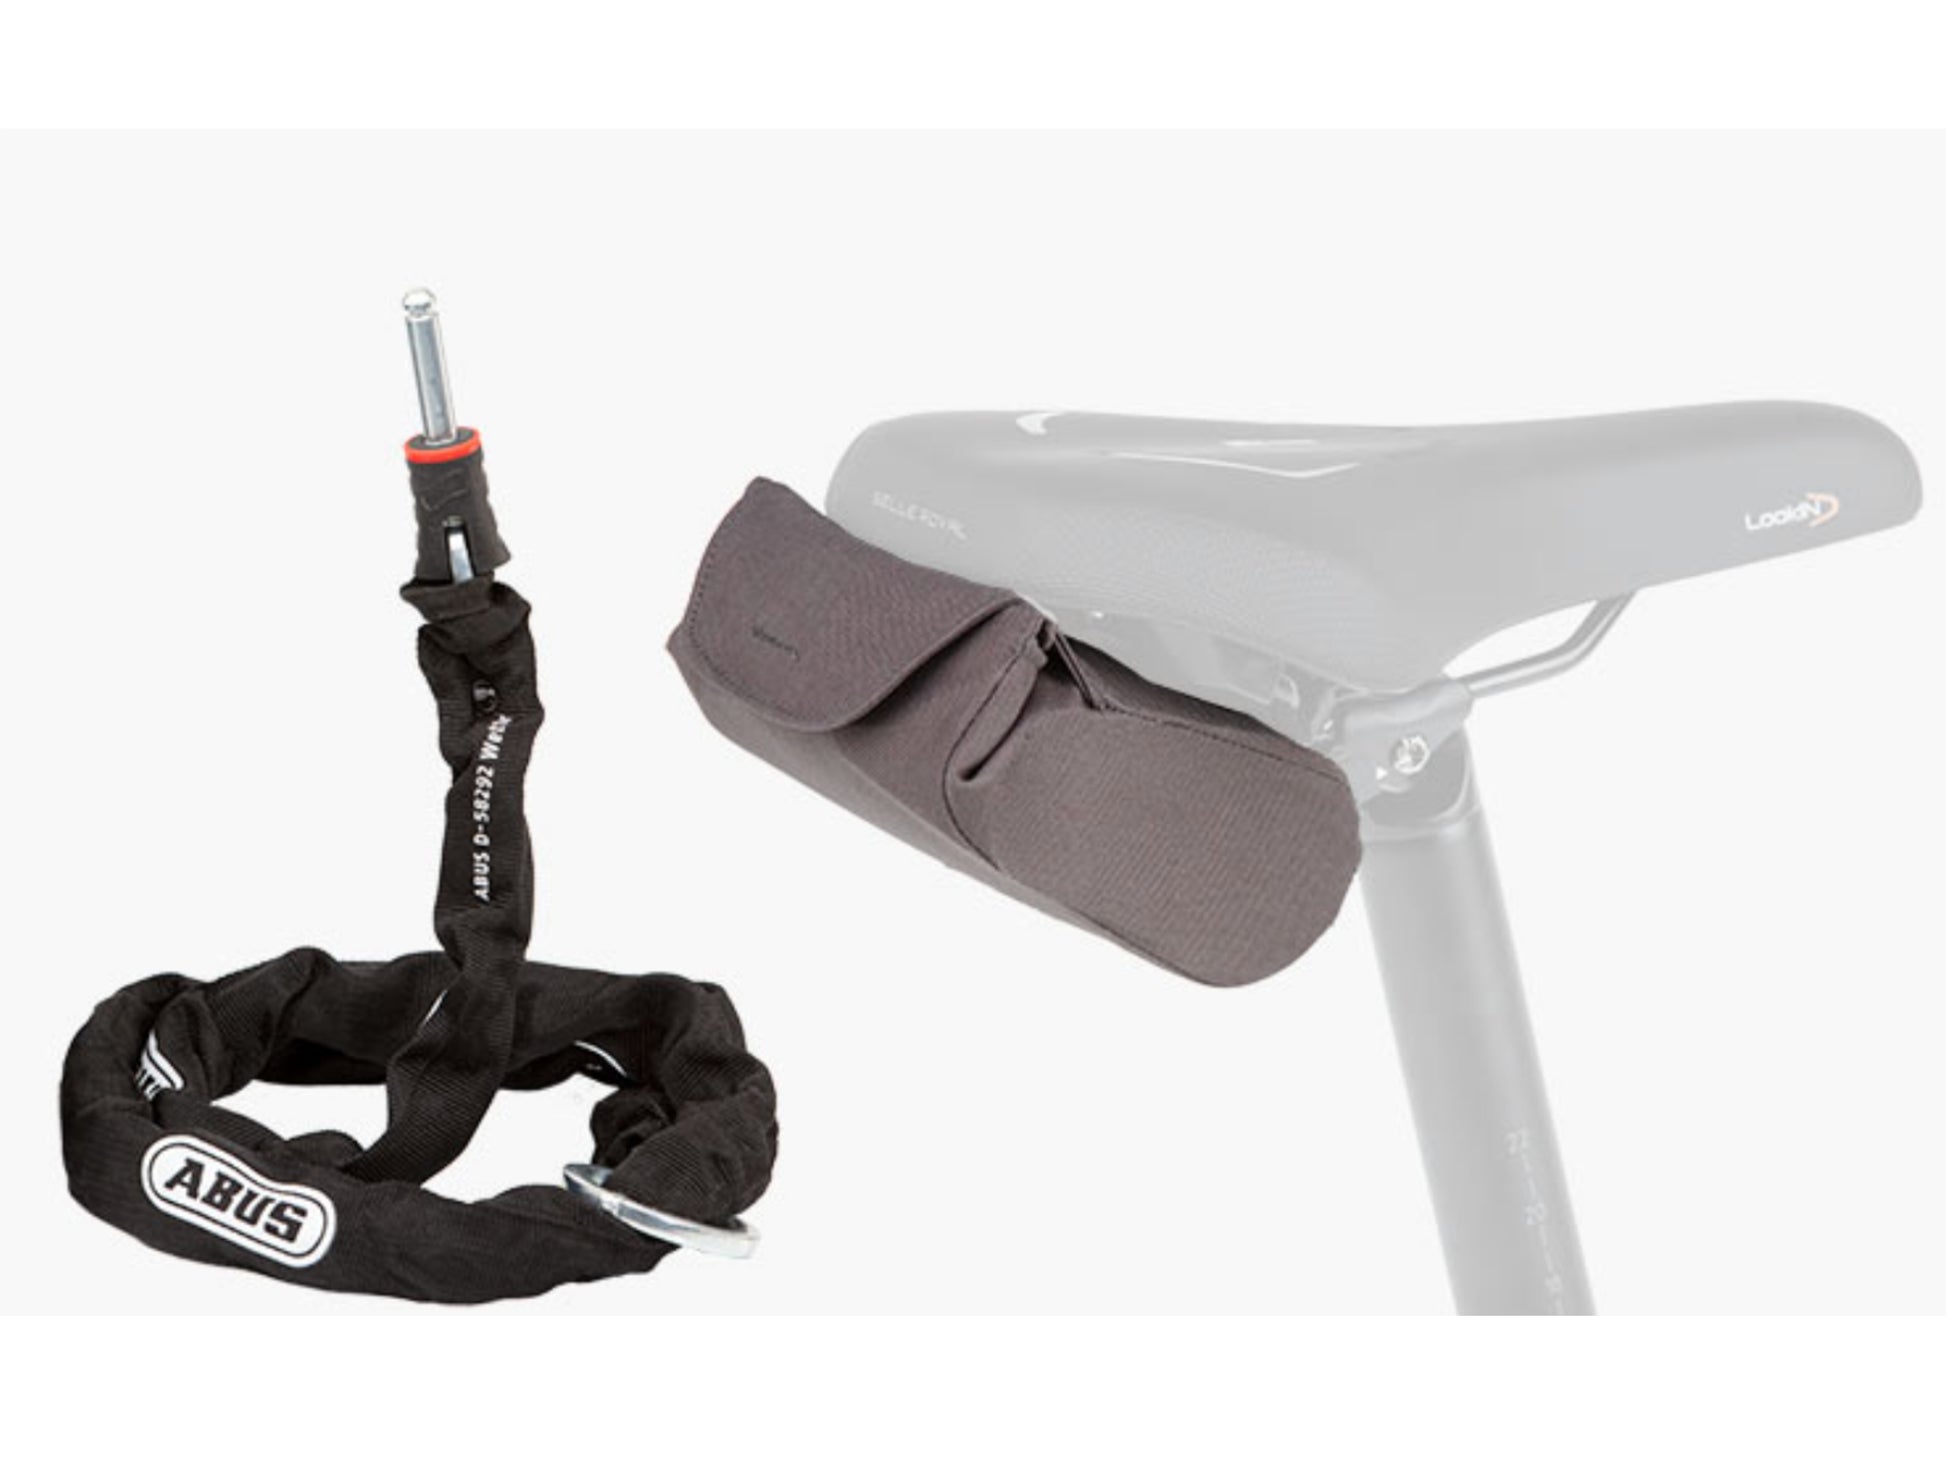 Riese & Muller Tinker2 Vario eMtb hardtail close up additional lock & bag